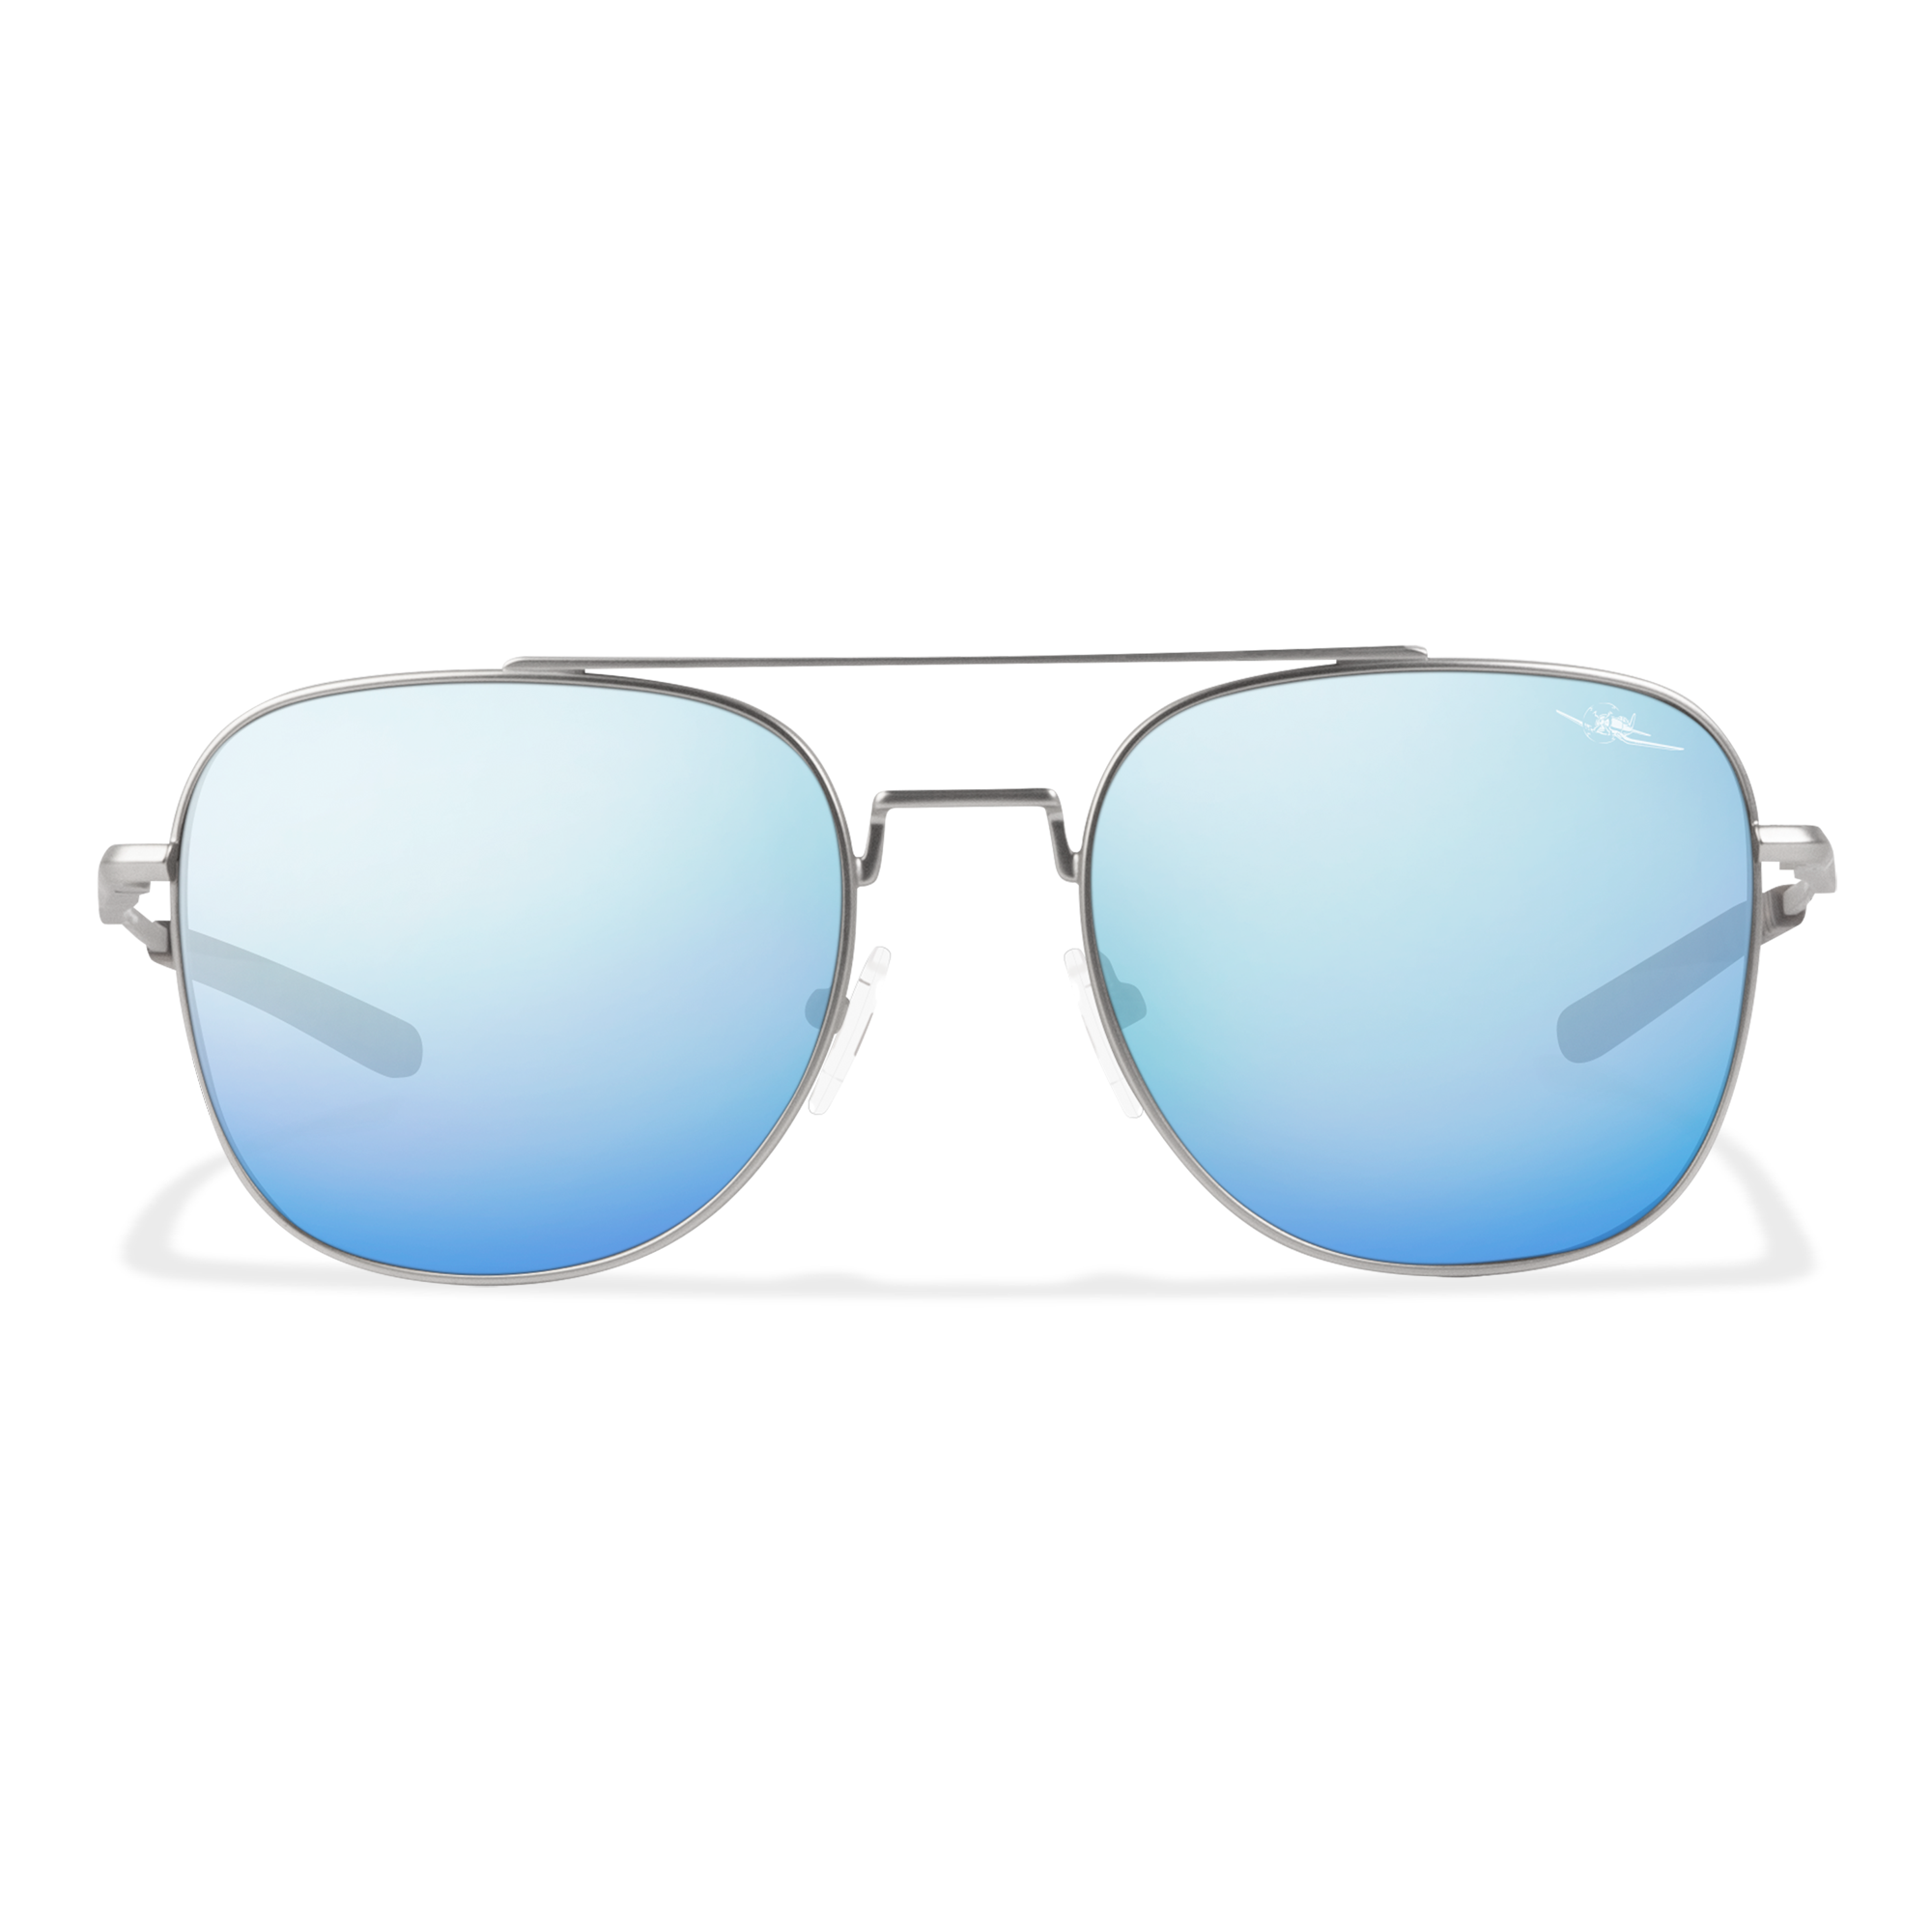 2020 New Fashion Unisex Streetwear Sunglasses Red Blue Splicing